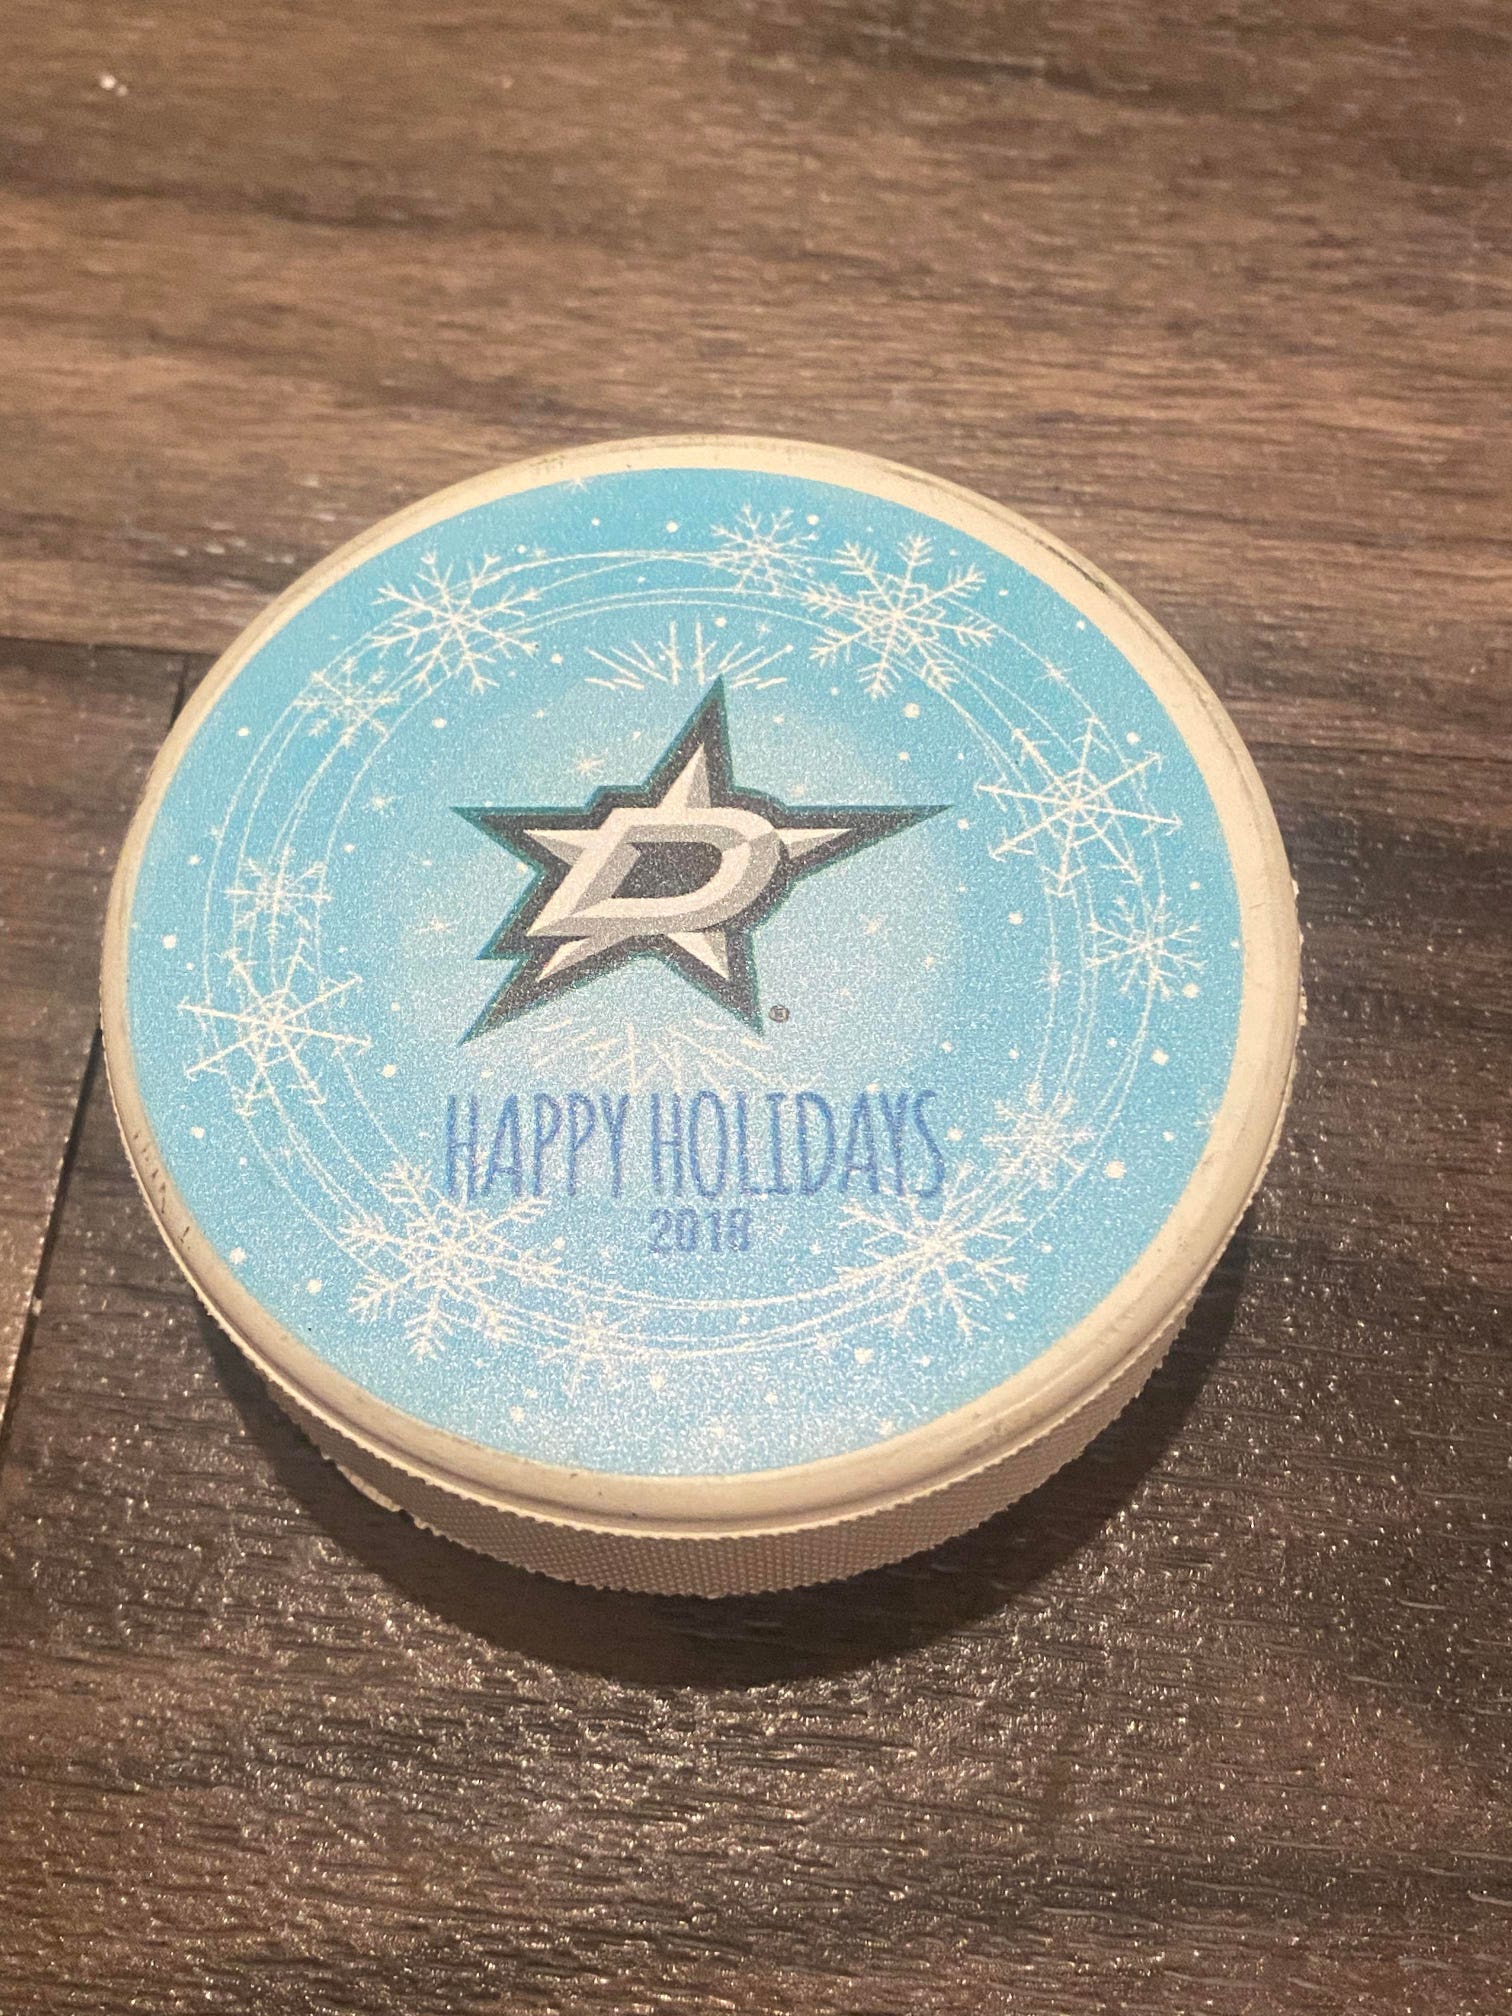 Dallas Stars Happy Holidays 2018 Collectible Hockey Puck